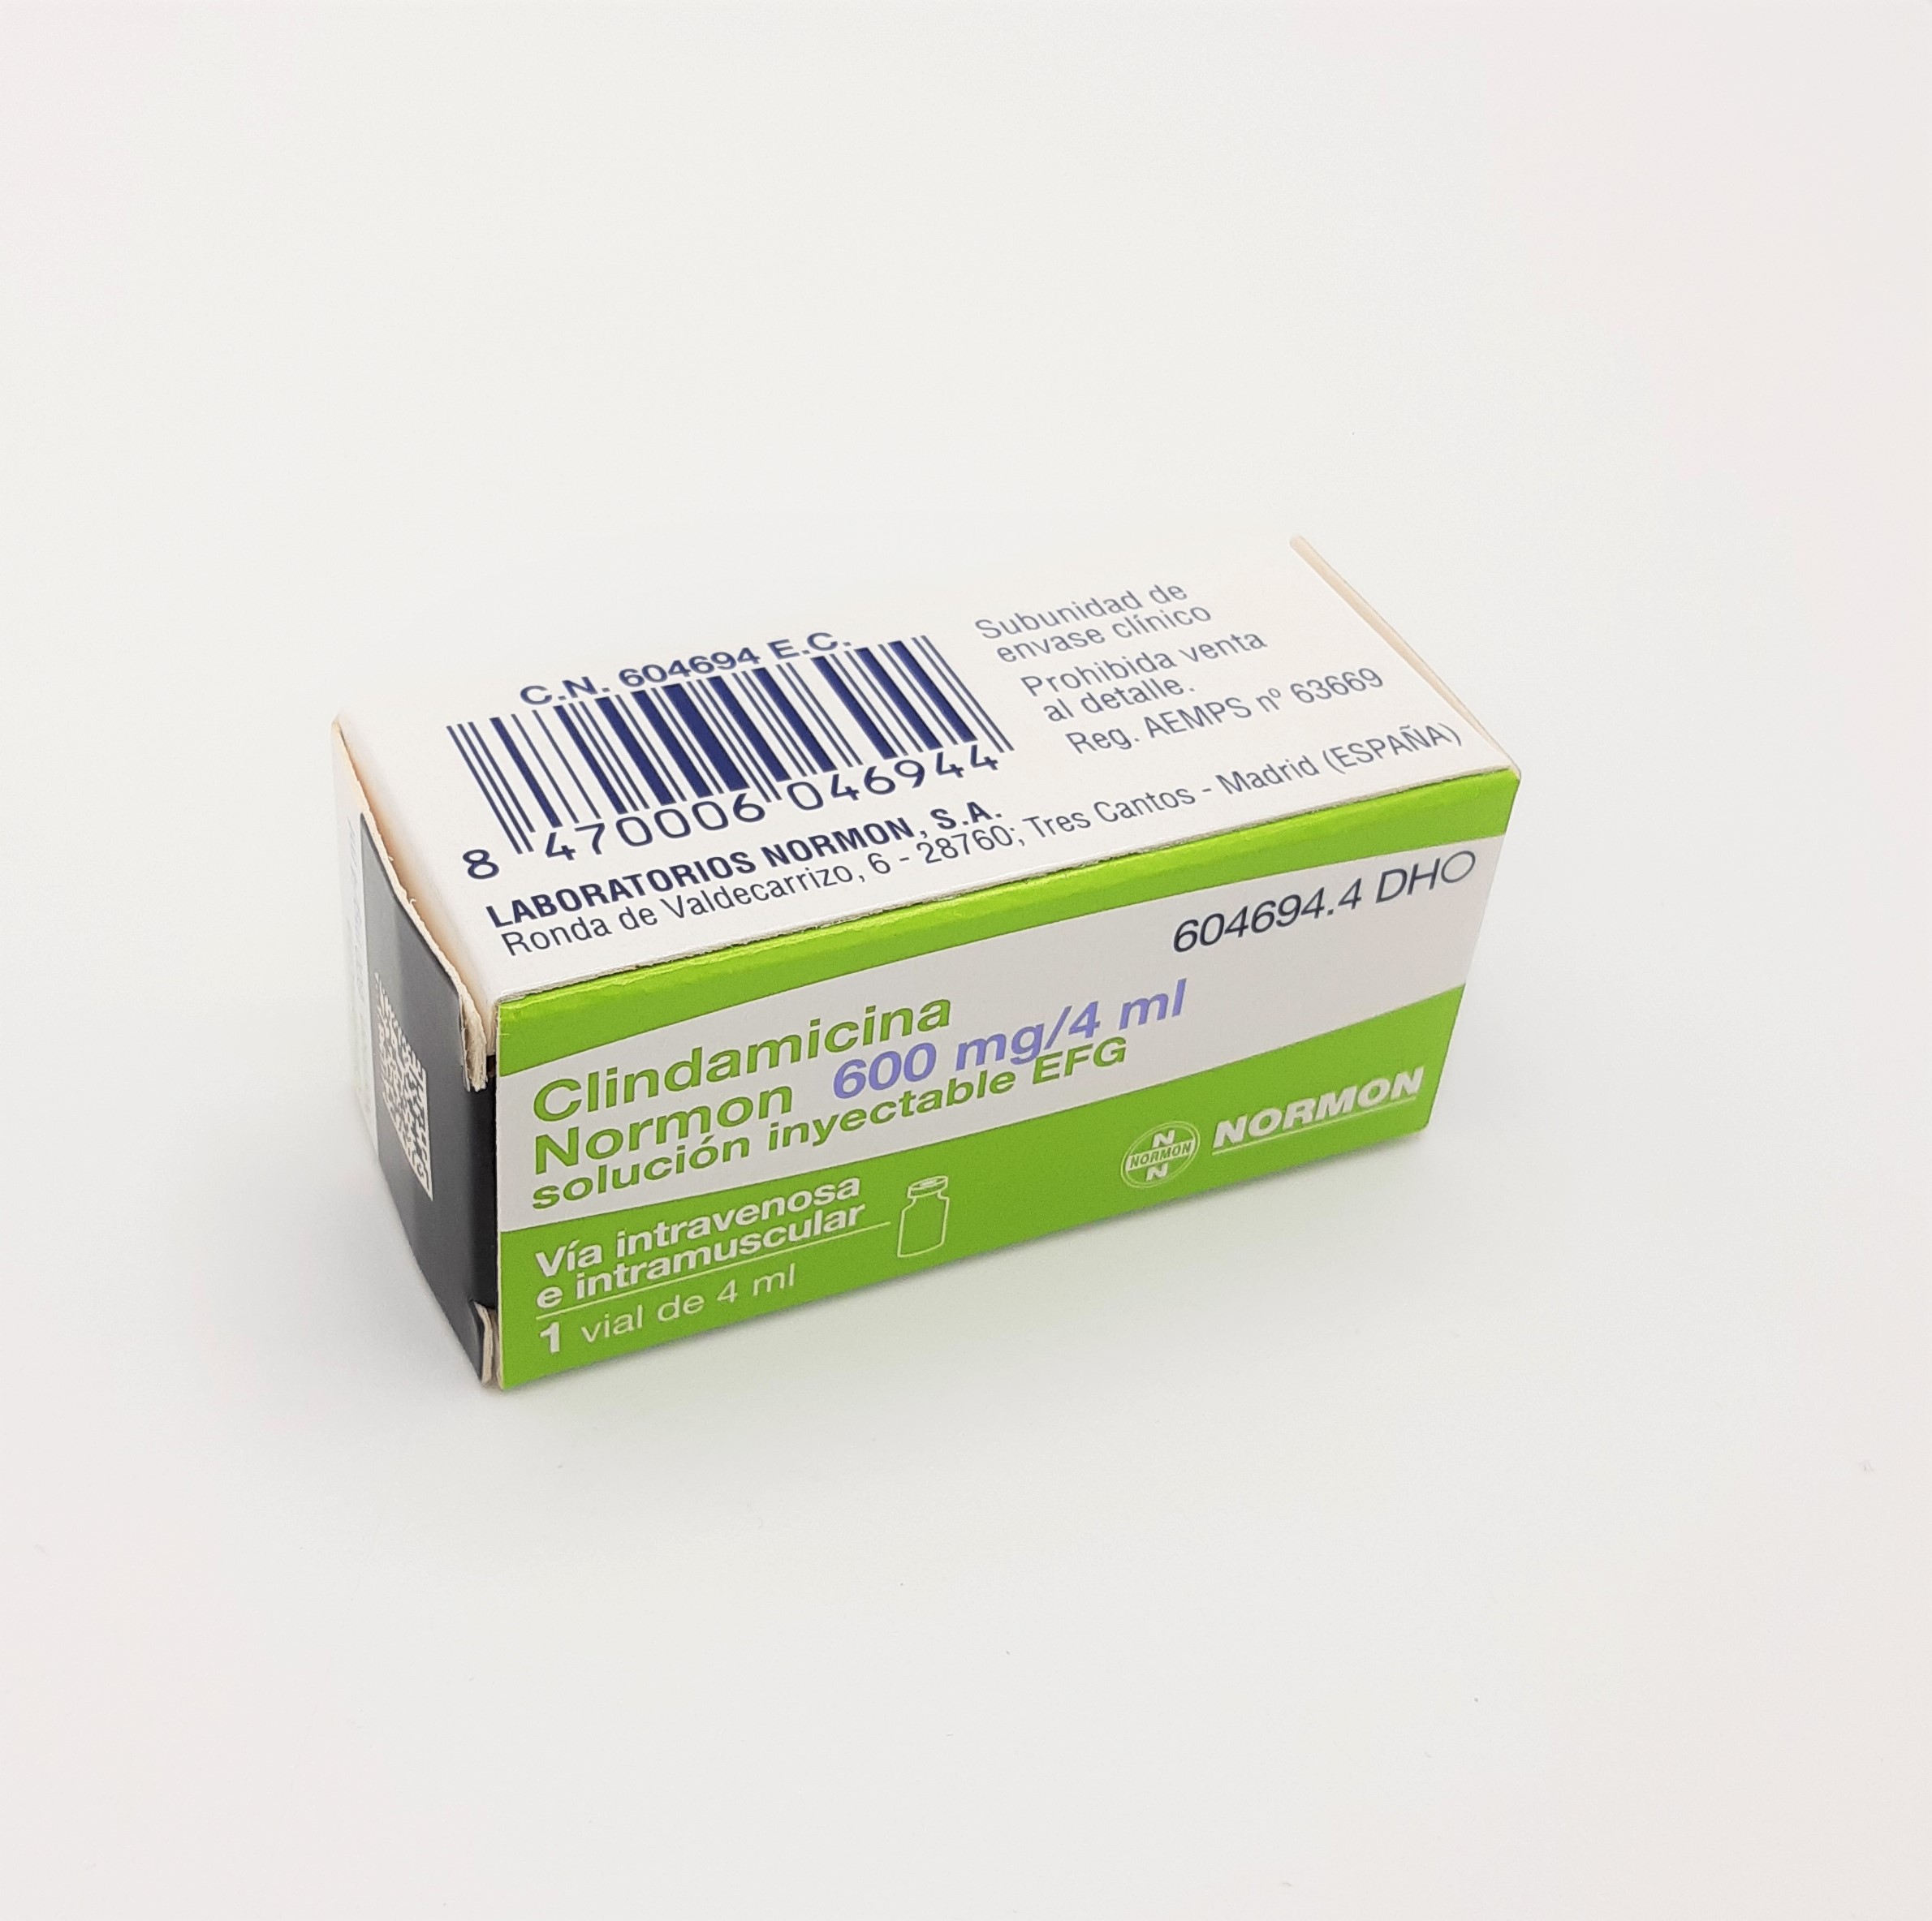 CLINDAMICINA NORMON EFG 600 mg 1 VIAL SOLUCION INYECTABLE 4 ml